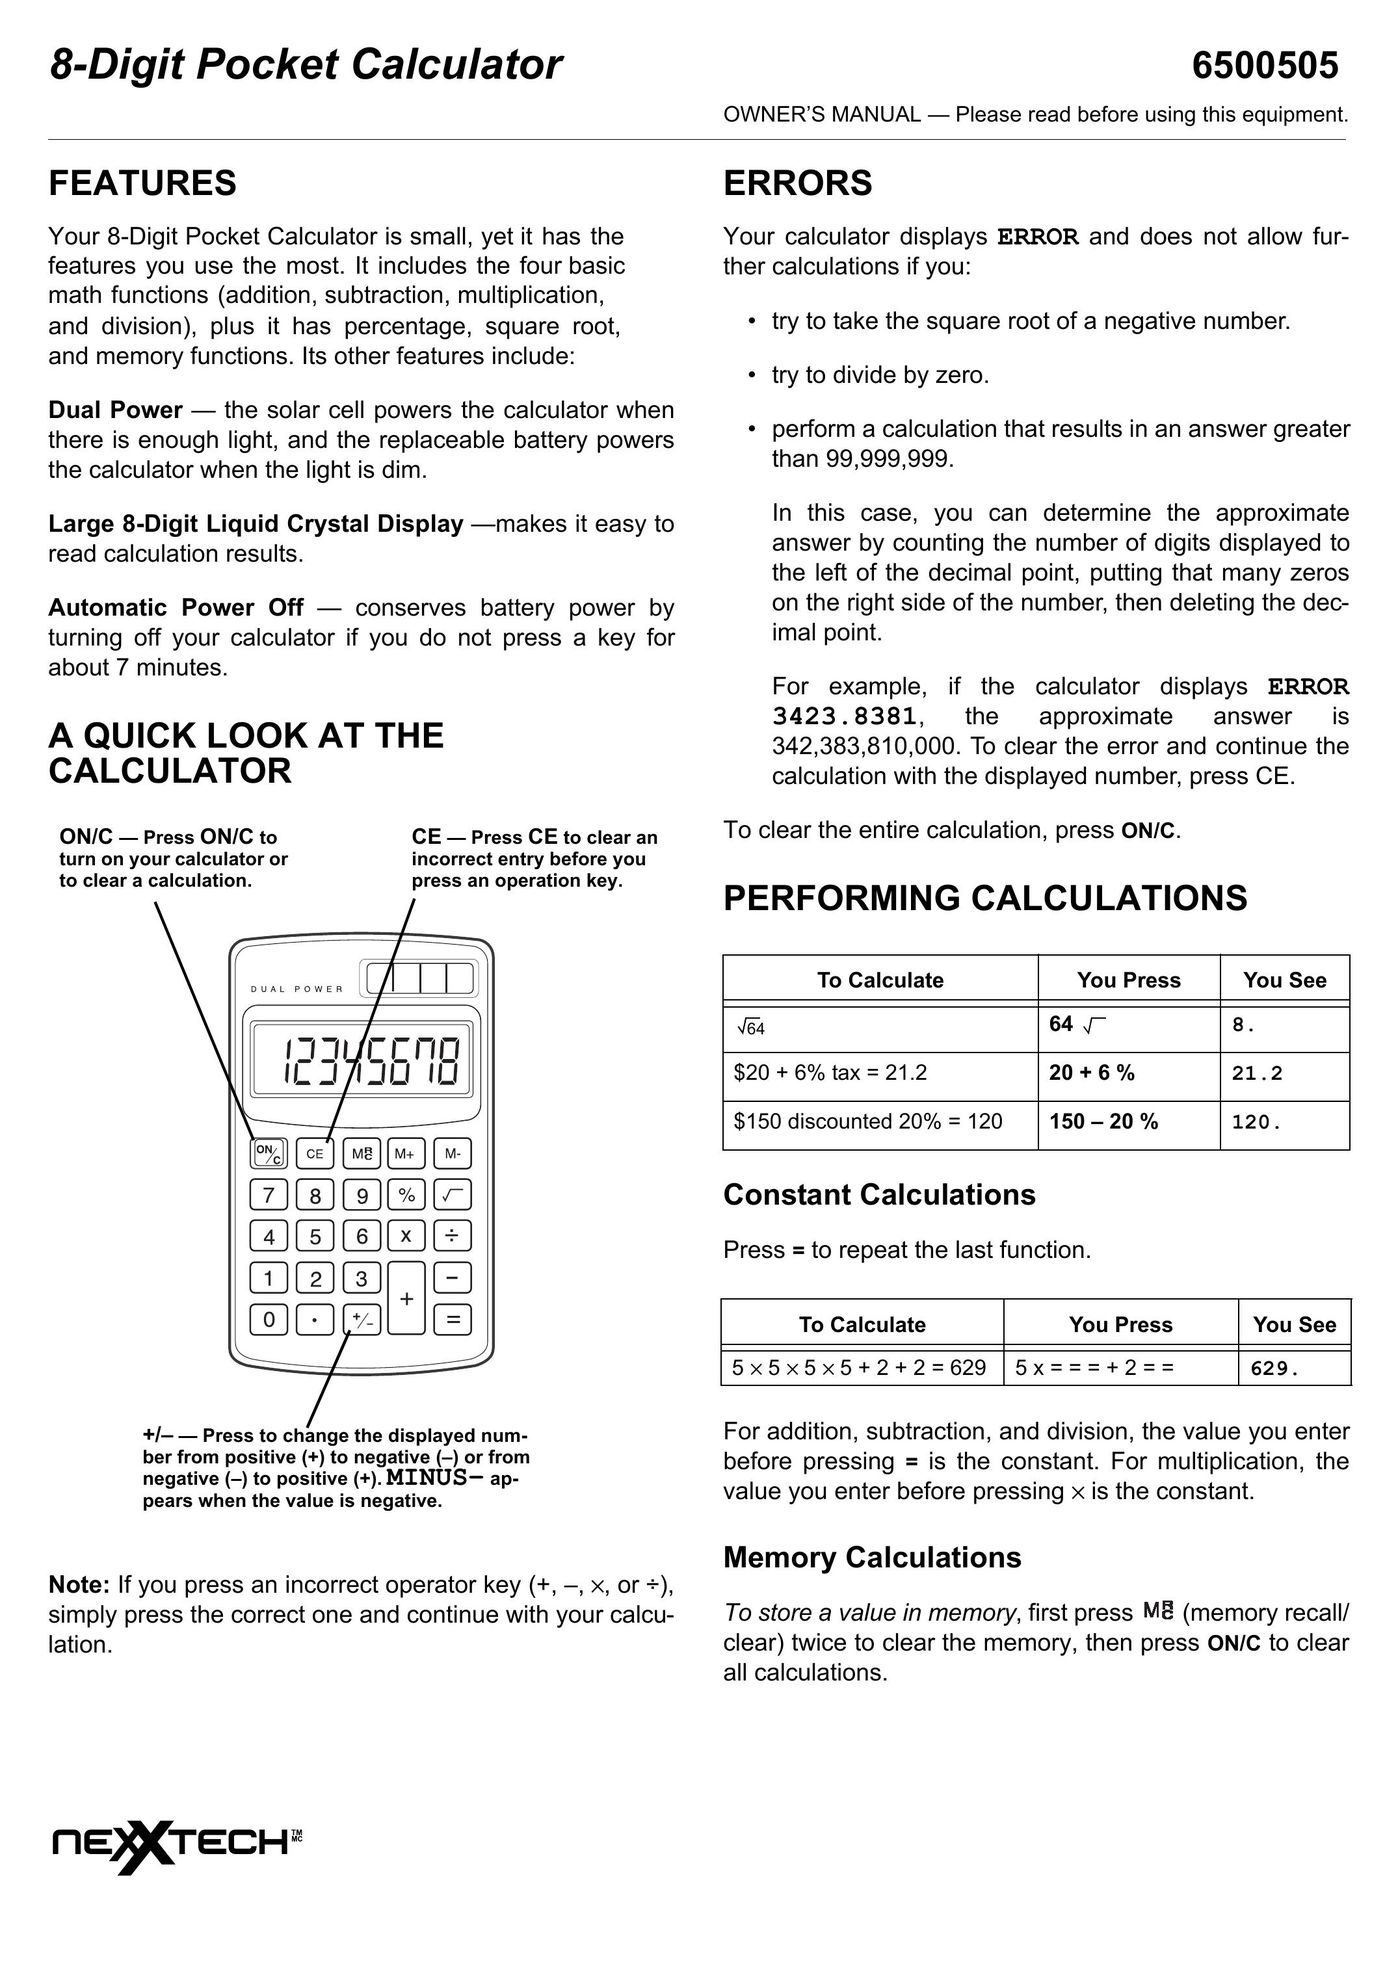 NexxTech 6500505 Calculator User Manual